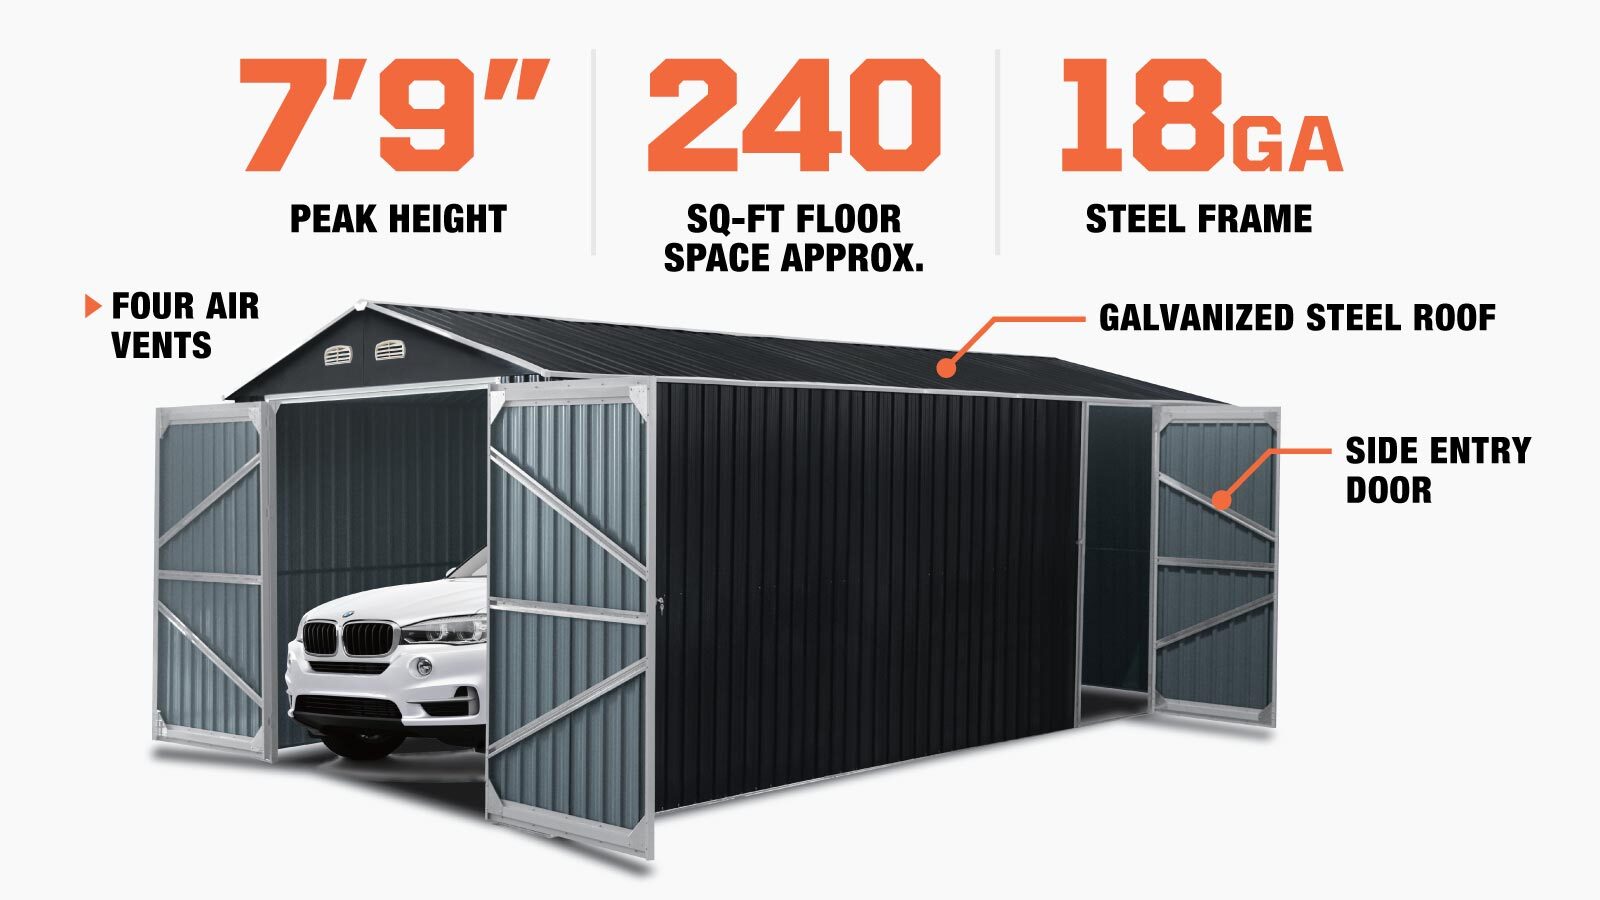 TMG Industrial 13’ x 20’ Metal Garage Shed with Double Front Doors, 7’9” Peak Height, Side Entry Door, 240 Sq-Ft Floor Space, TMG-MS1320A-description-image